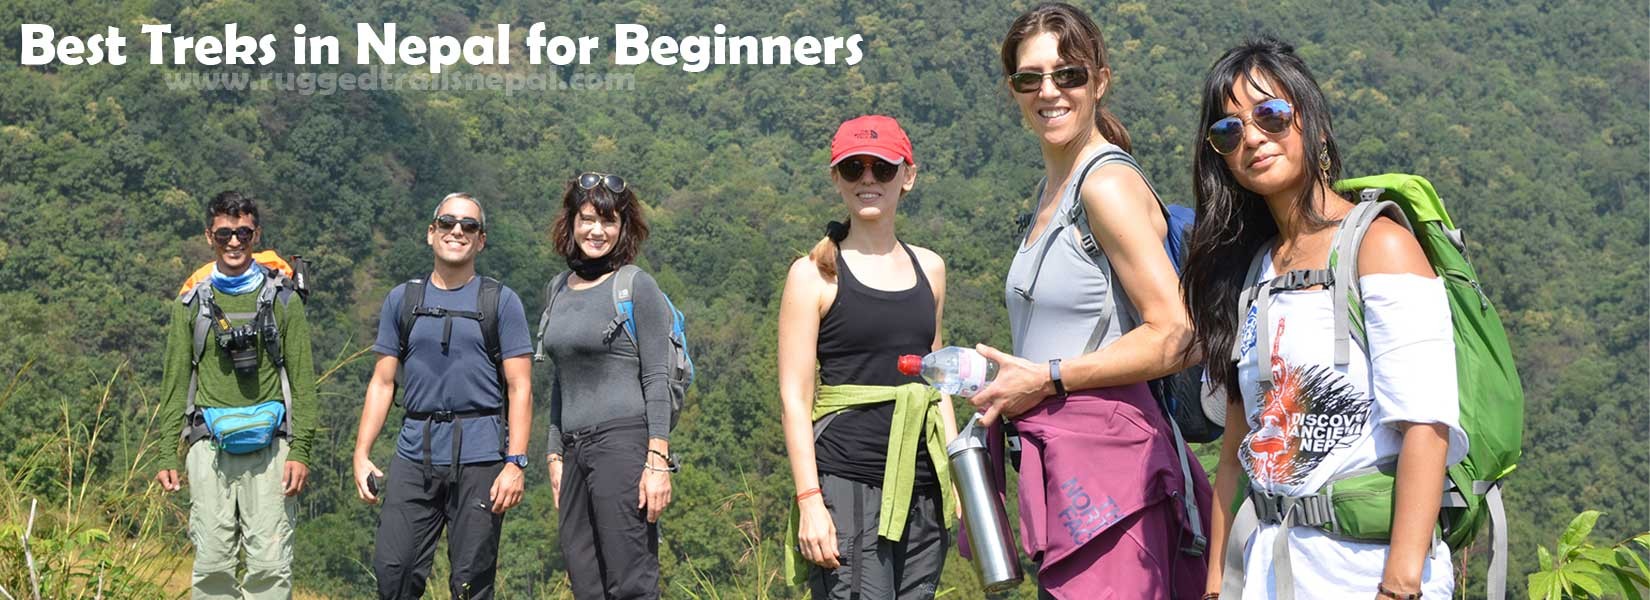 top best treks in nepal for beginners